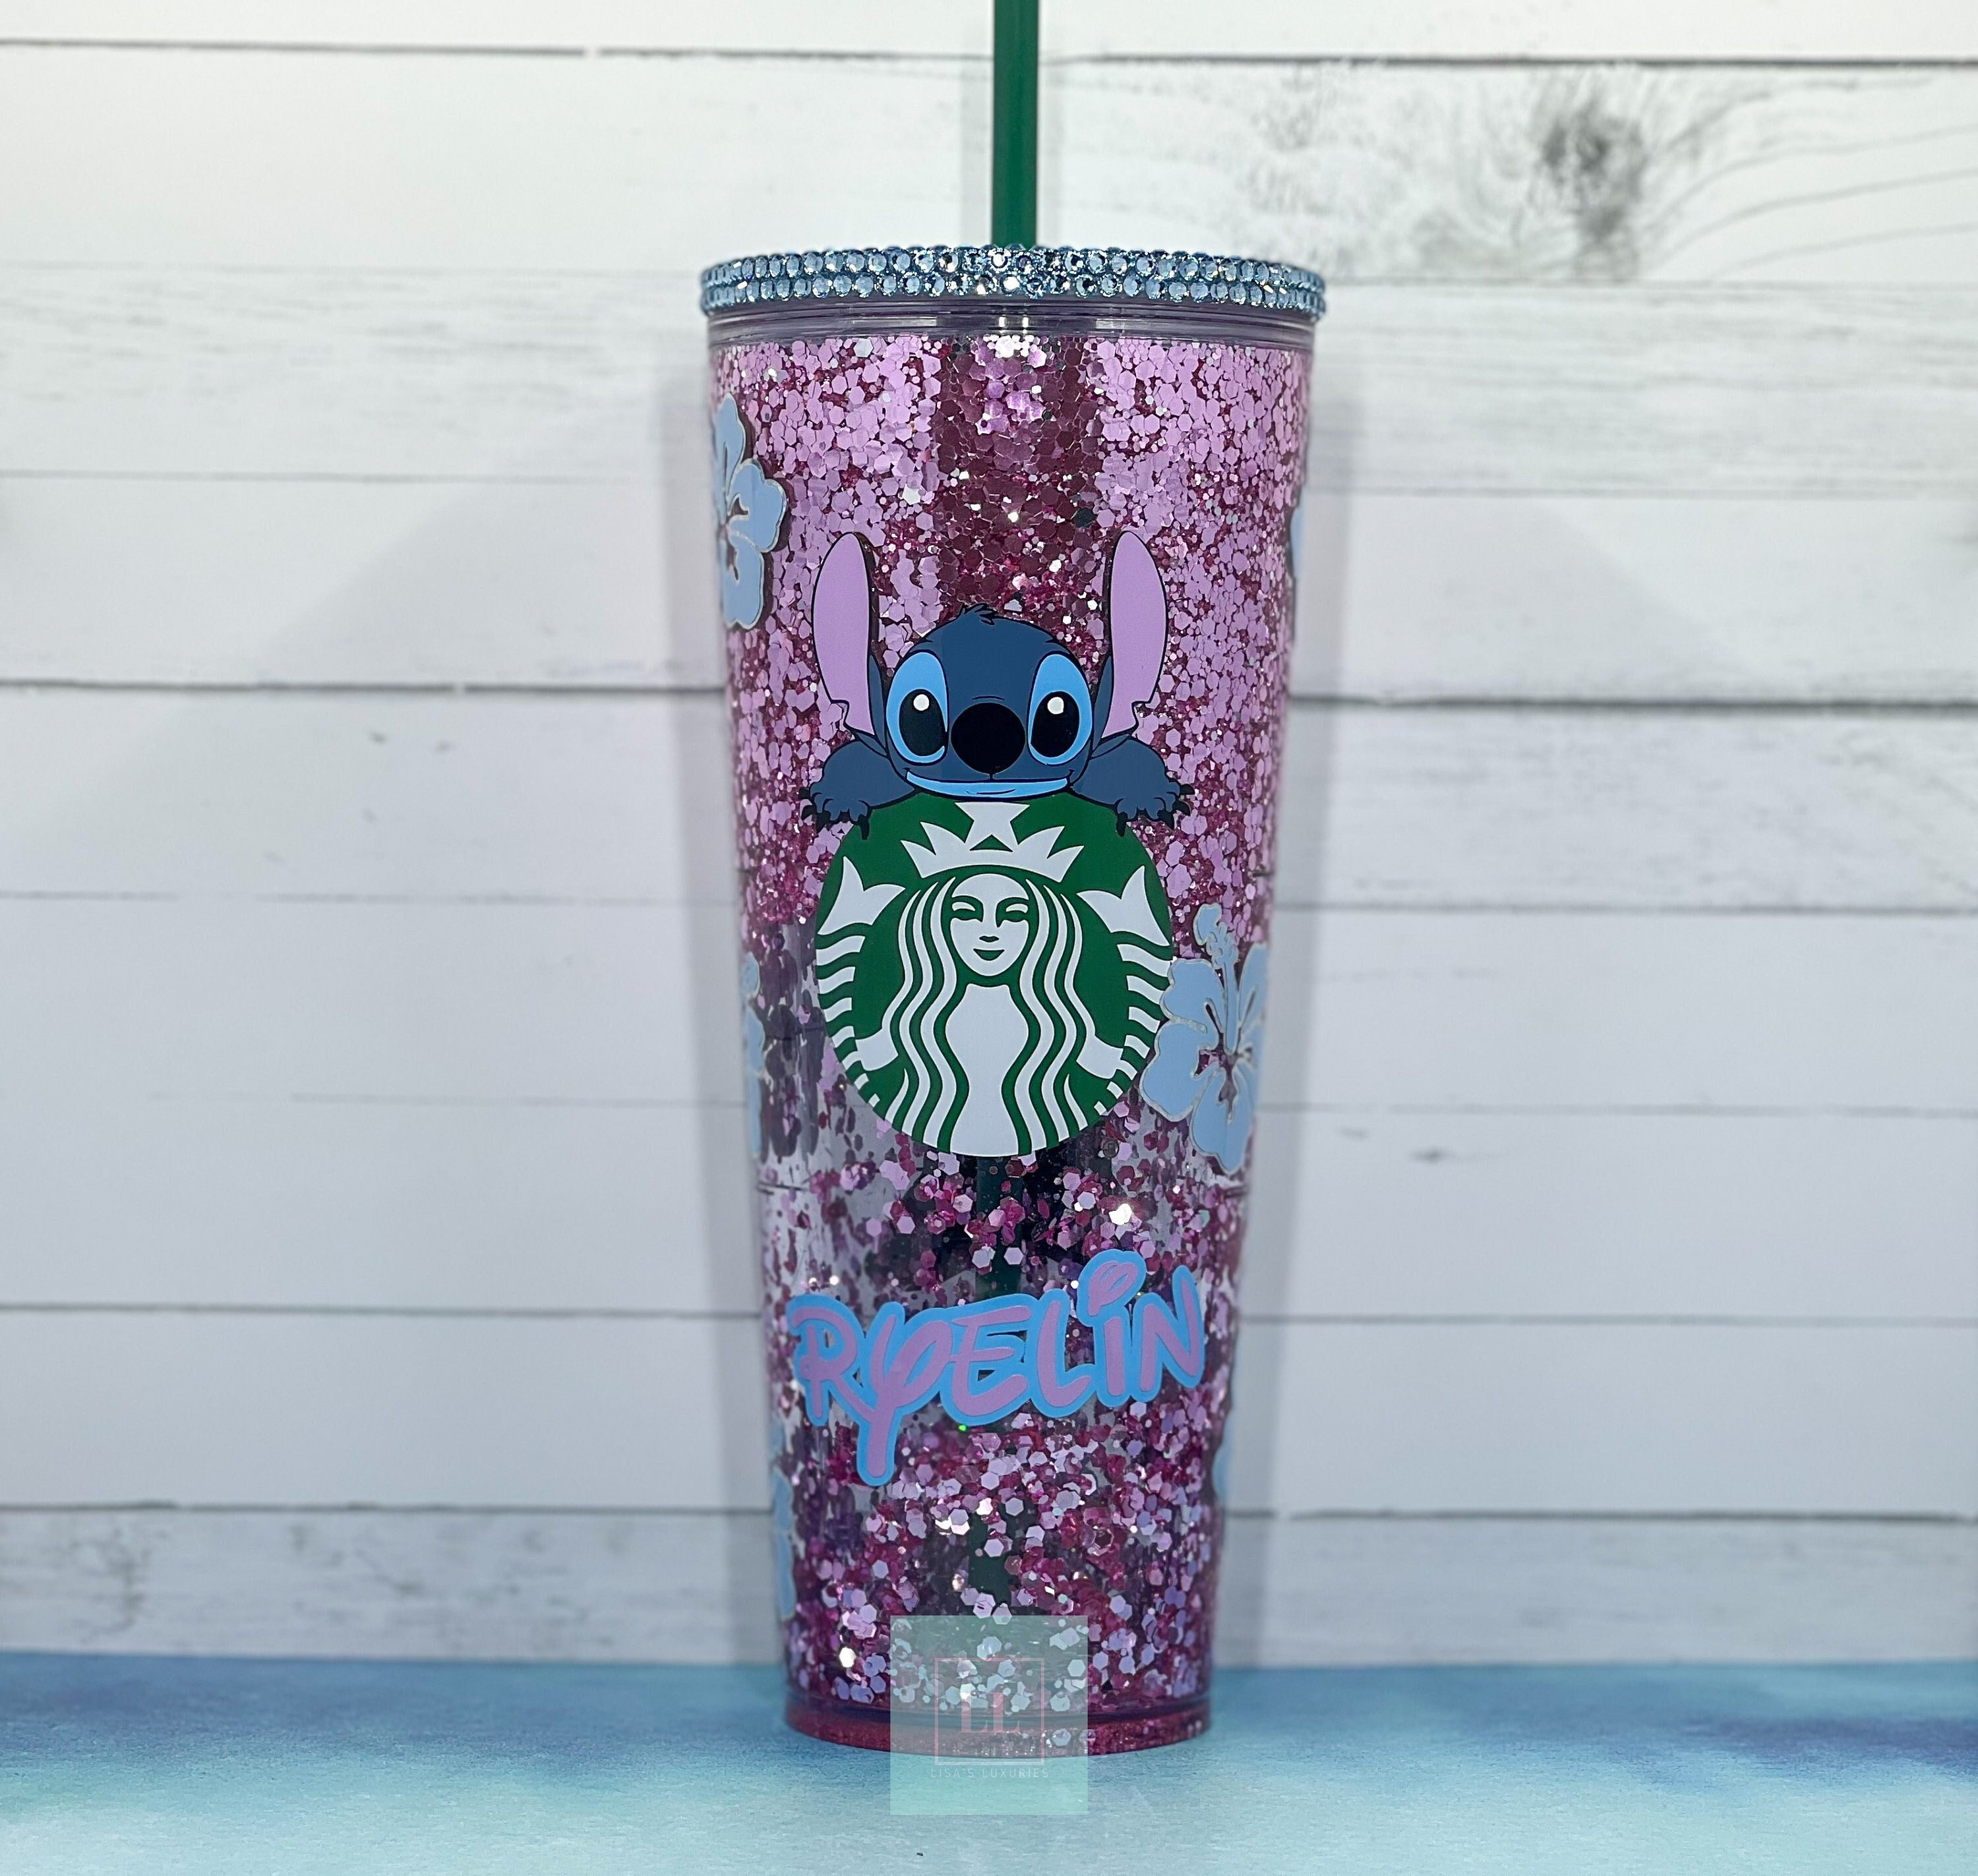 Stitch With Guitar Starbucks Cup SVG - Hibiscus Flower SVG